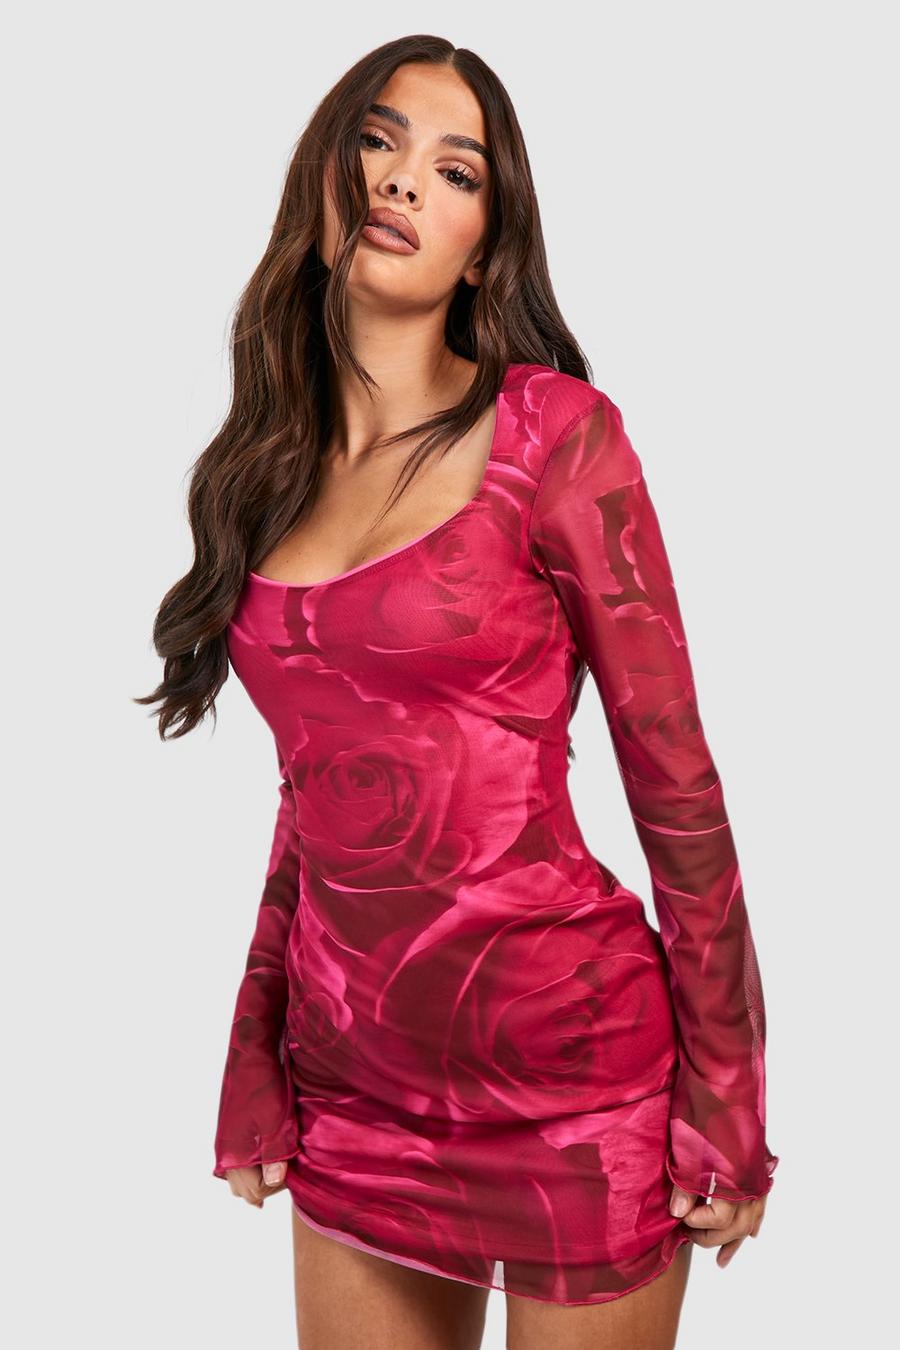 Red Dress Pink Fuchsia Velvet Long Sleeve Mini Bodycon Dress - Medium